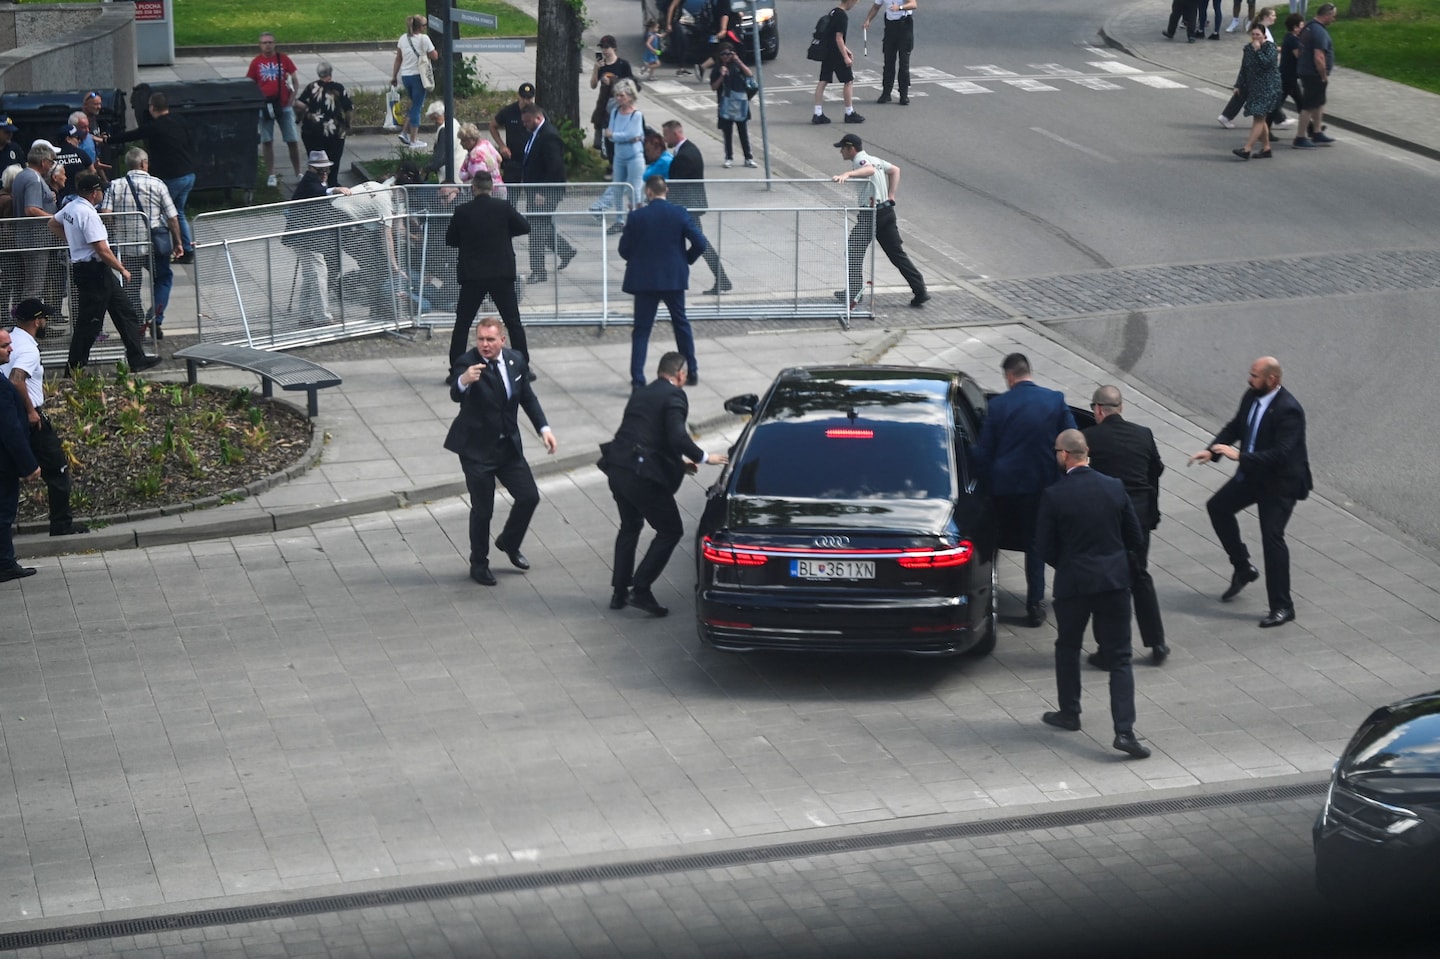 Slovak Prime Minister Robert Fico shot and gravely injured